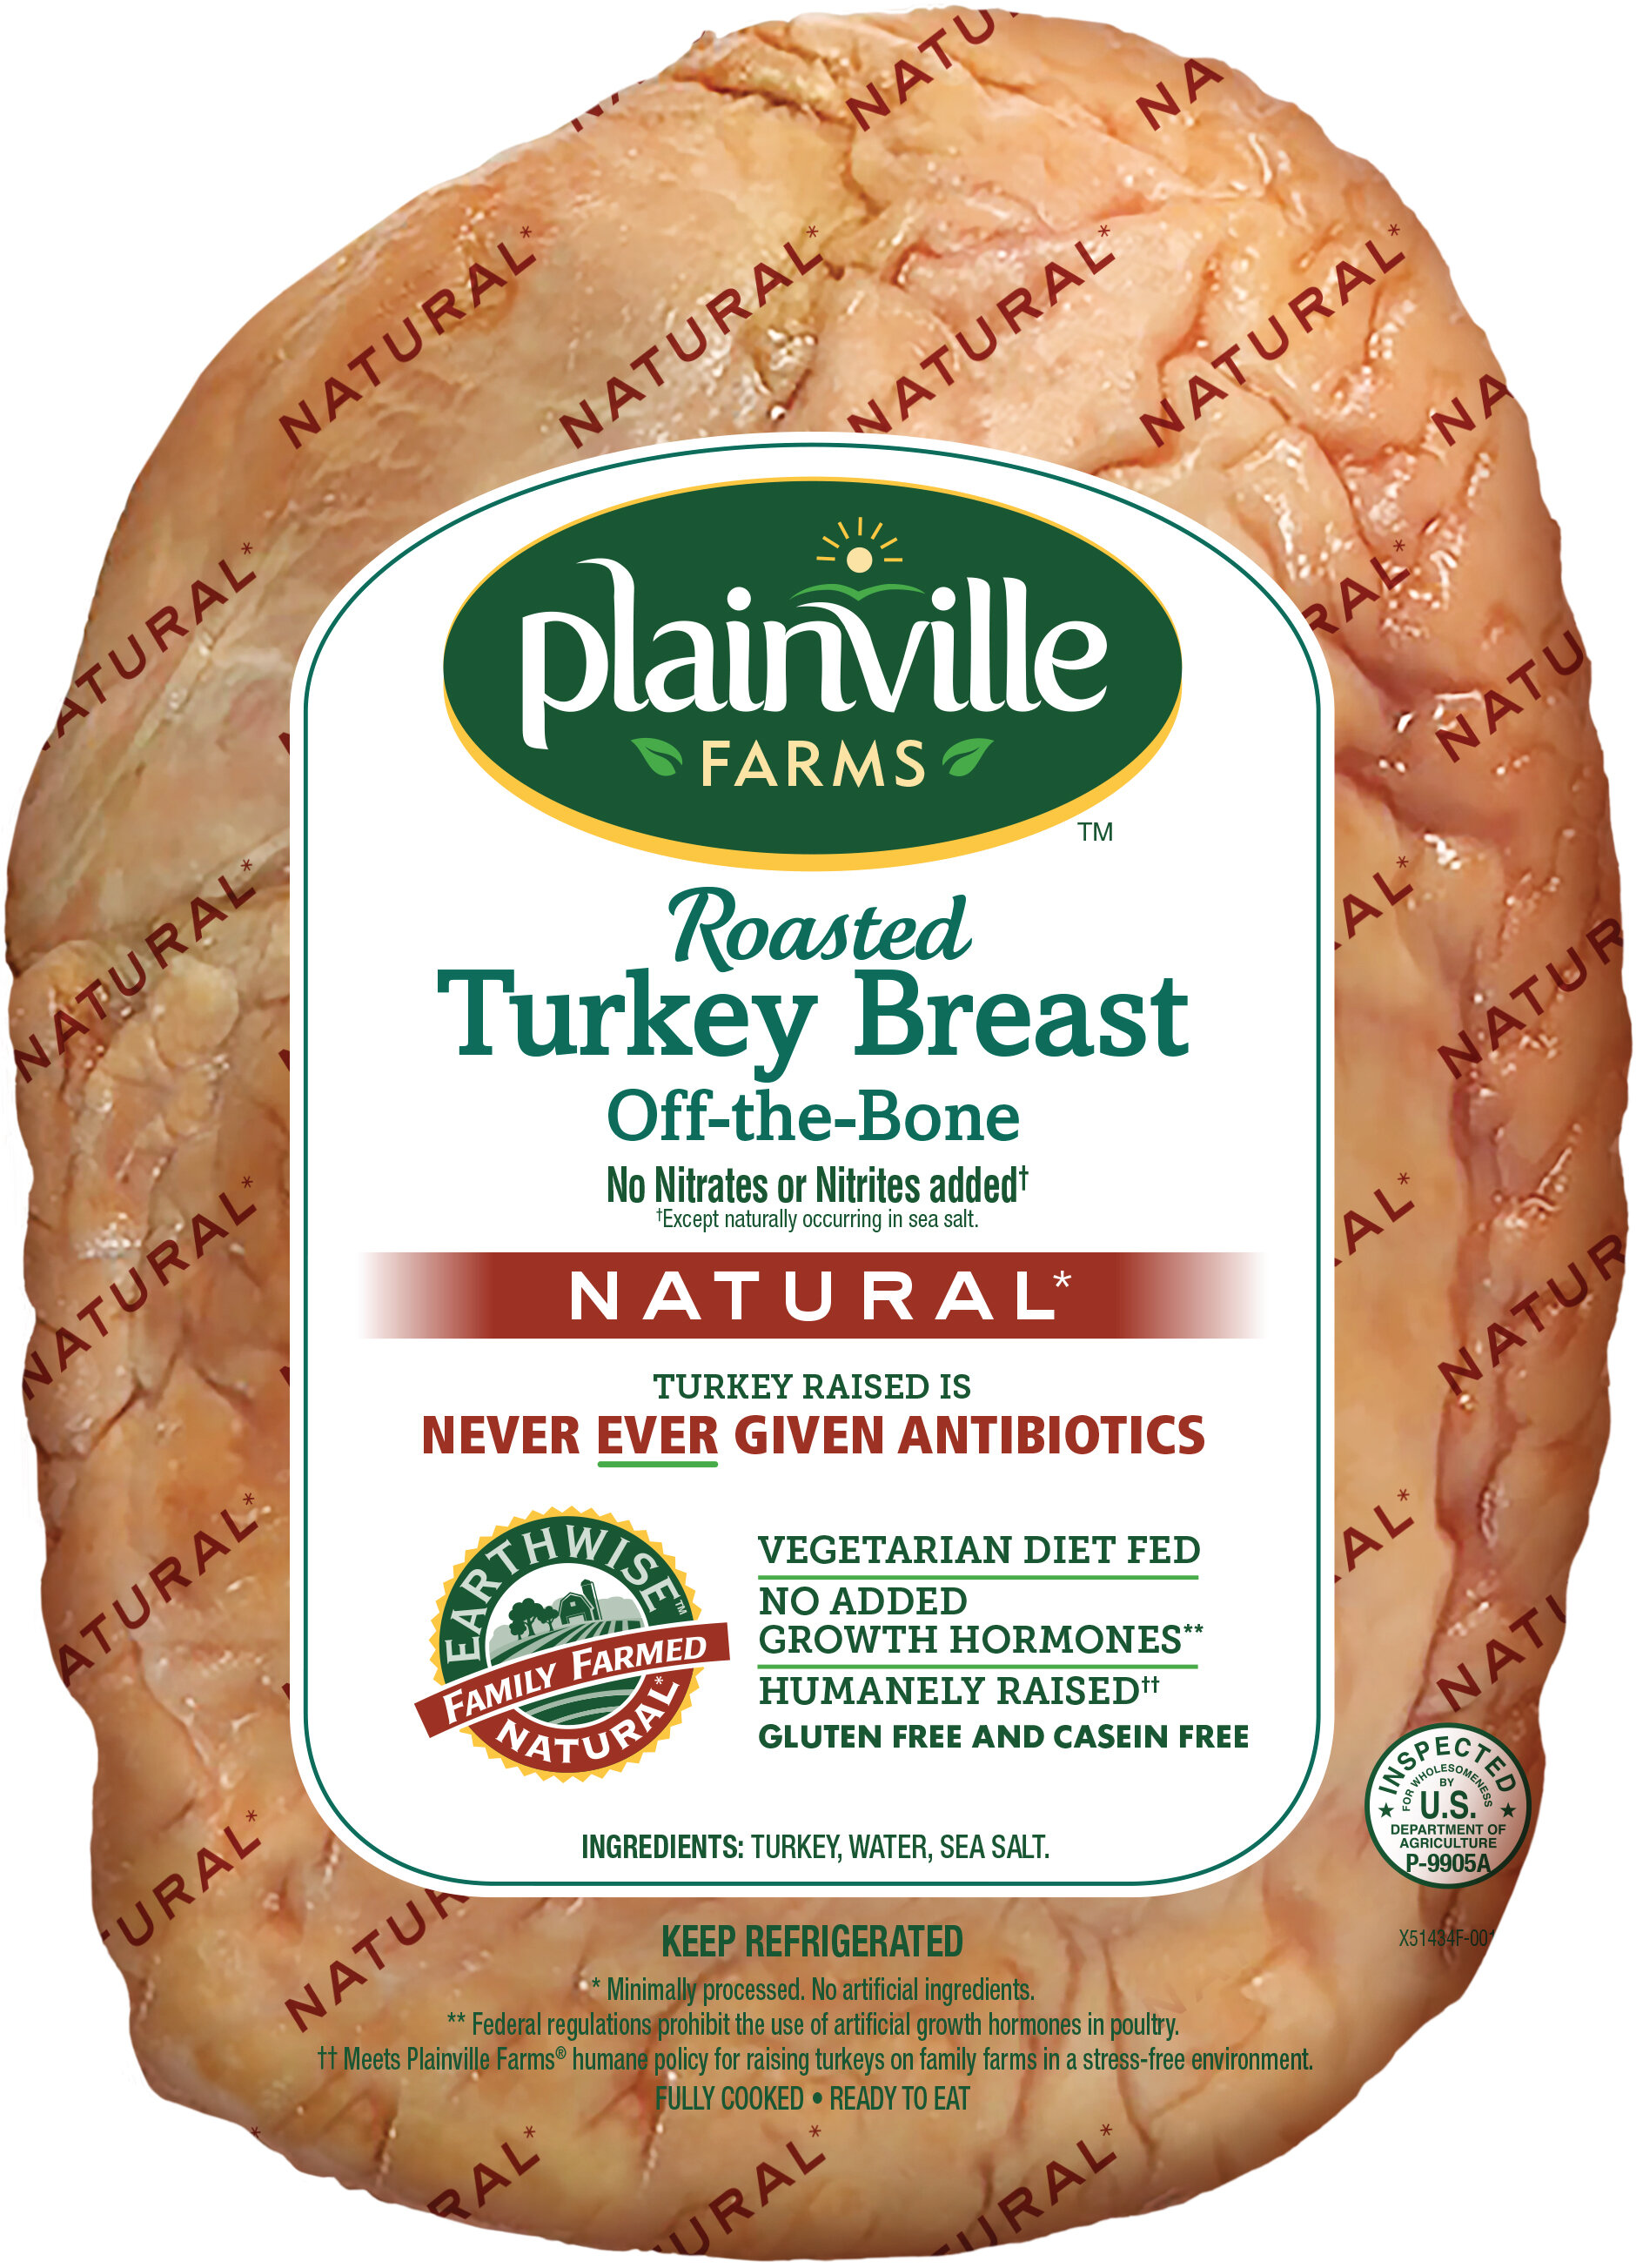 Roasted Off-the-bone Turkey Breast